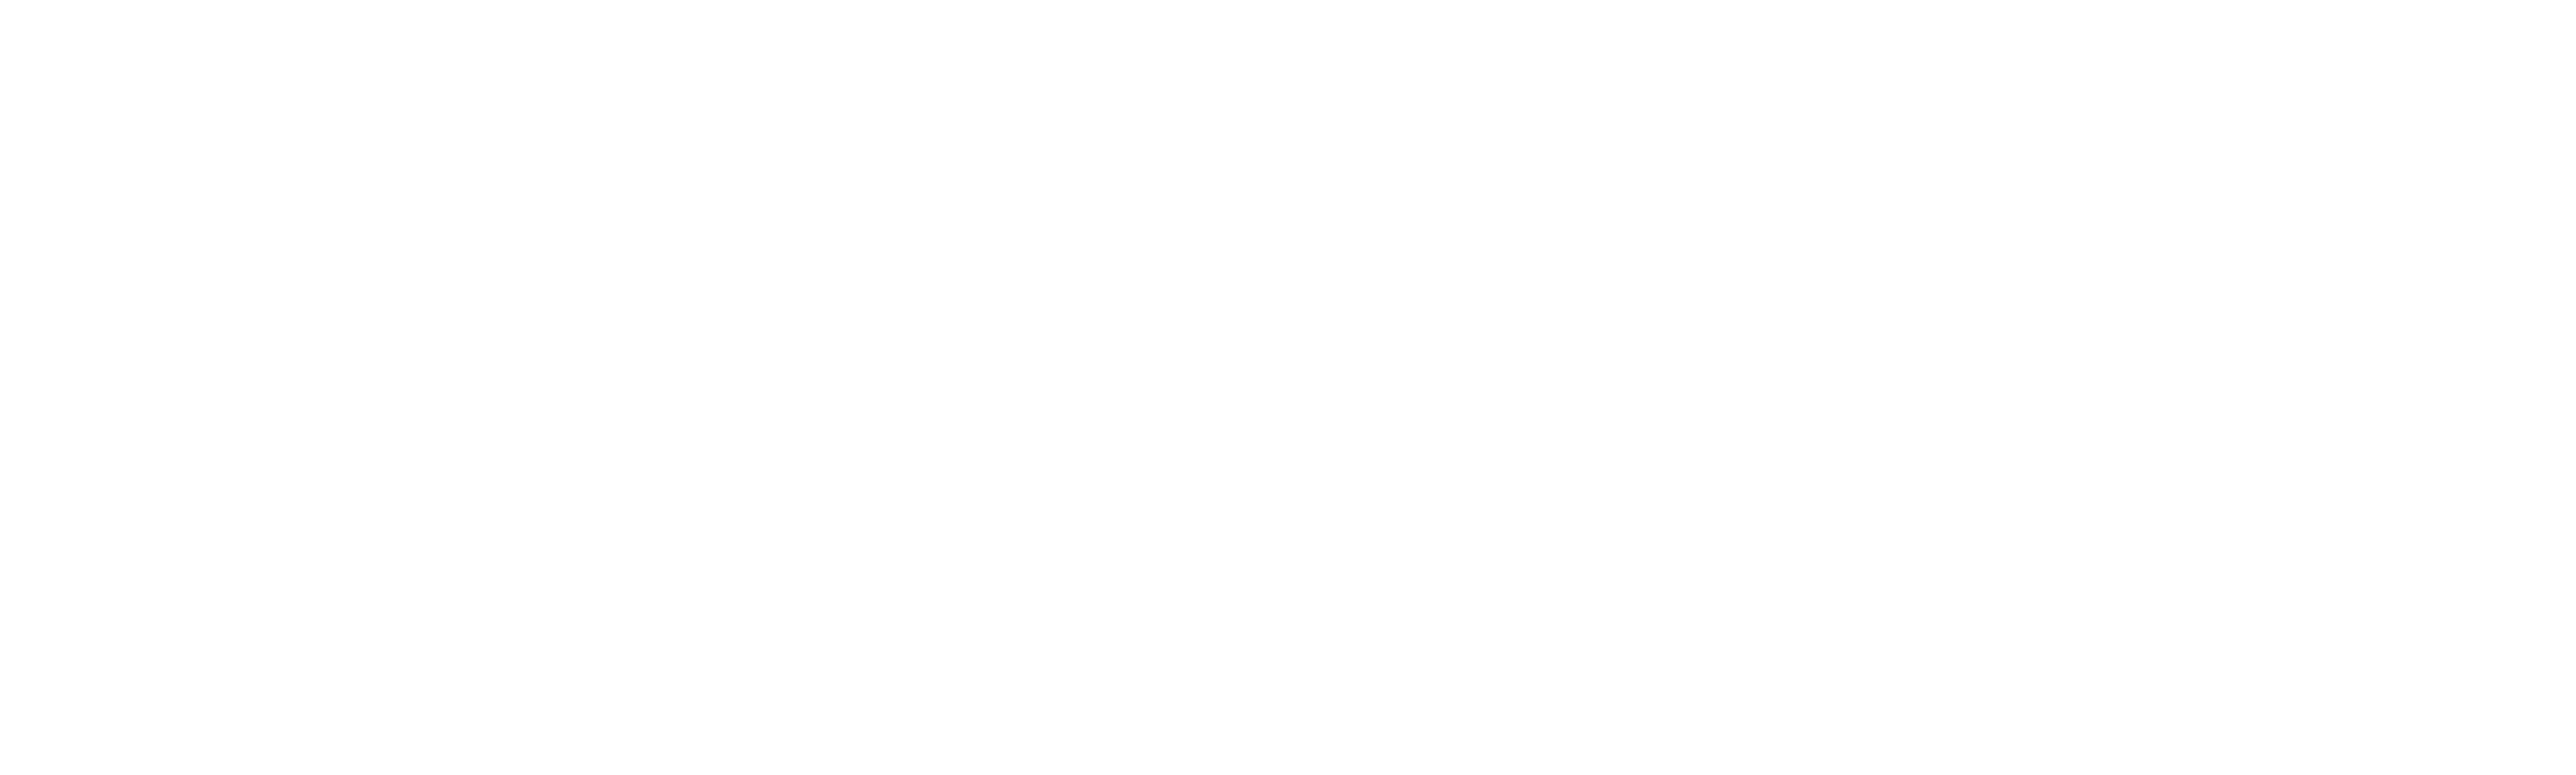 Watch The Mentalist season 1 episode 7 streaming online